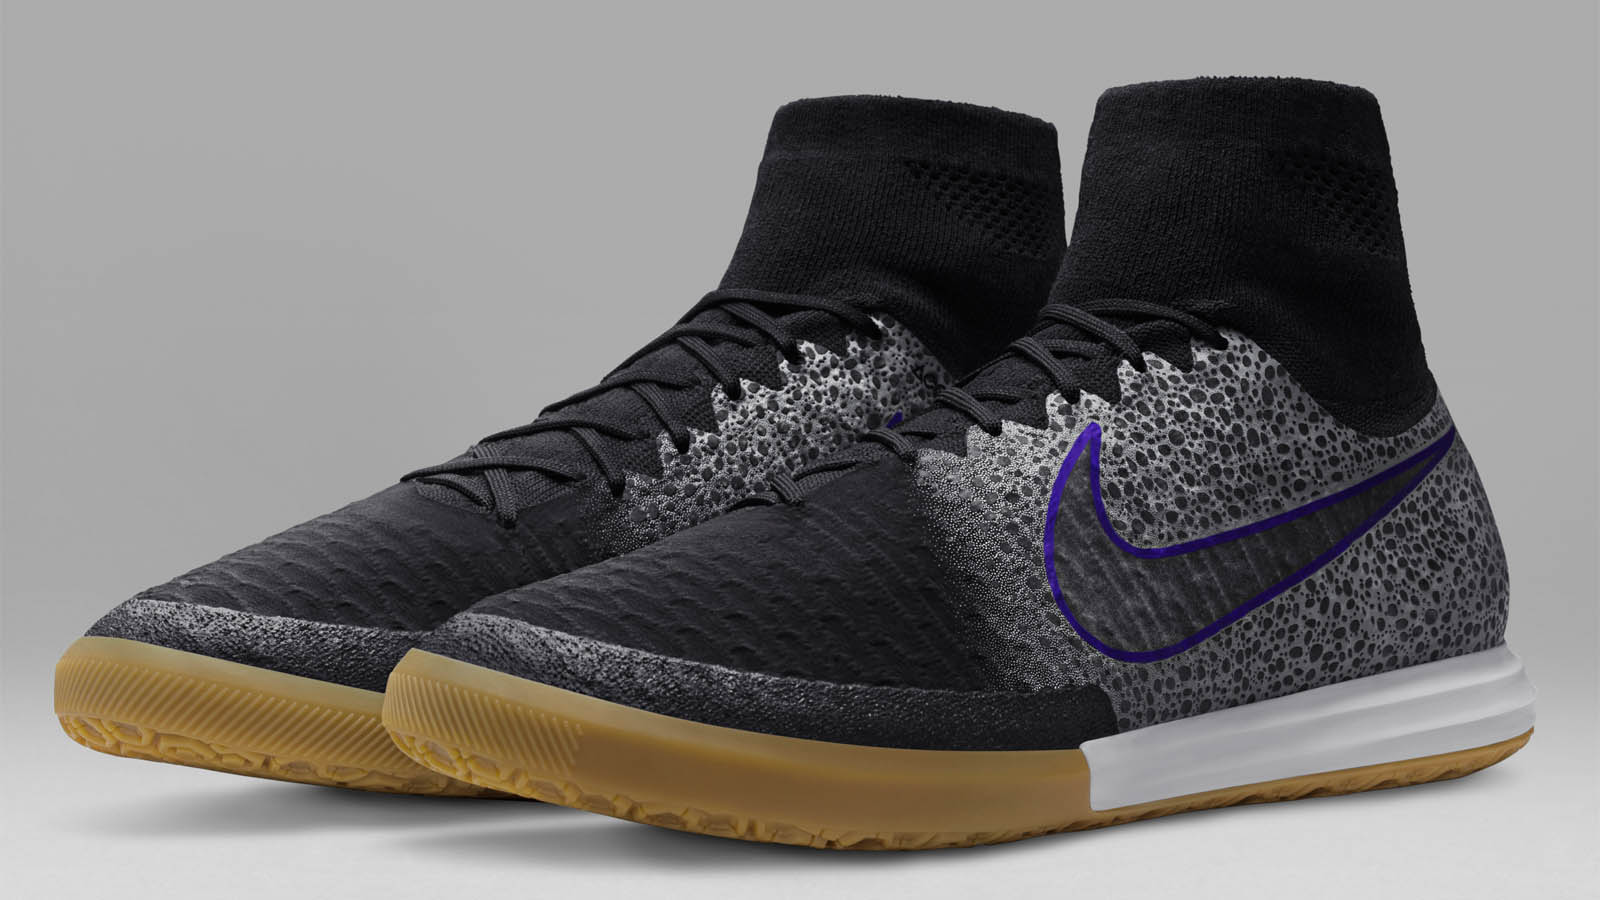 Perfekt Bevæger sig ikke serie Nike Magista X Proximo 2016 Safari Boots Released - Footy Headlines